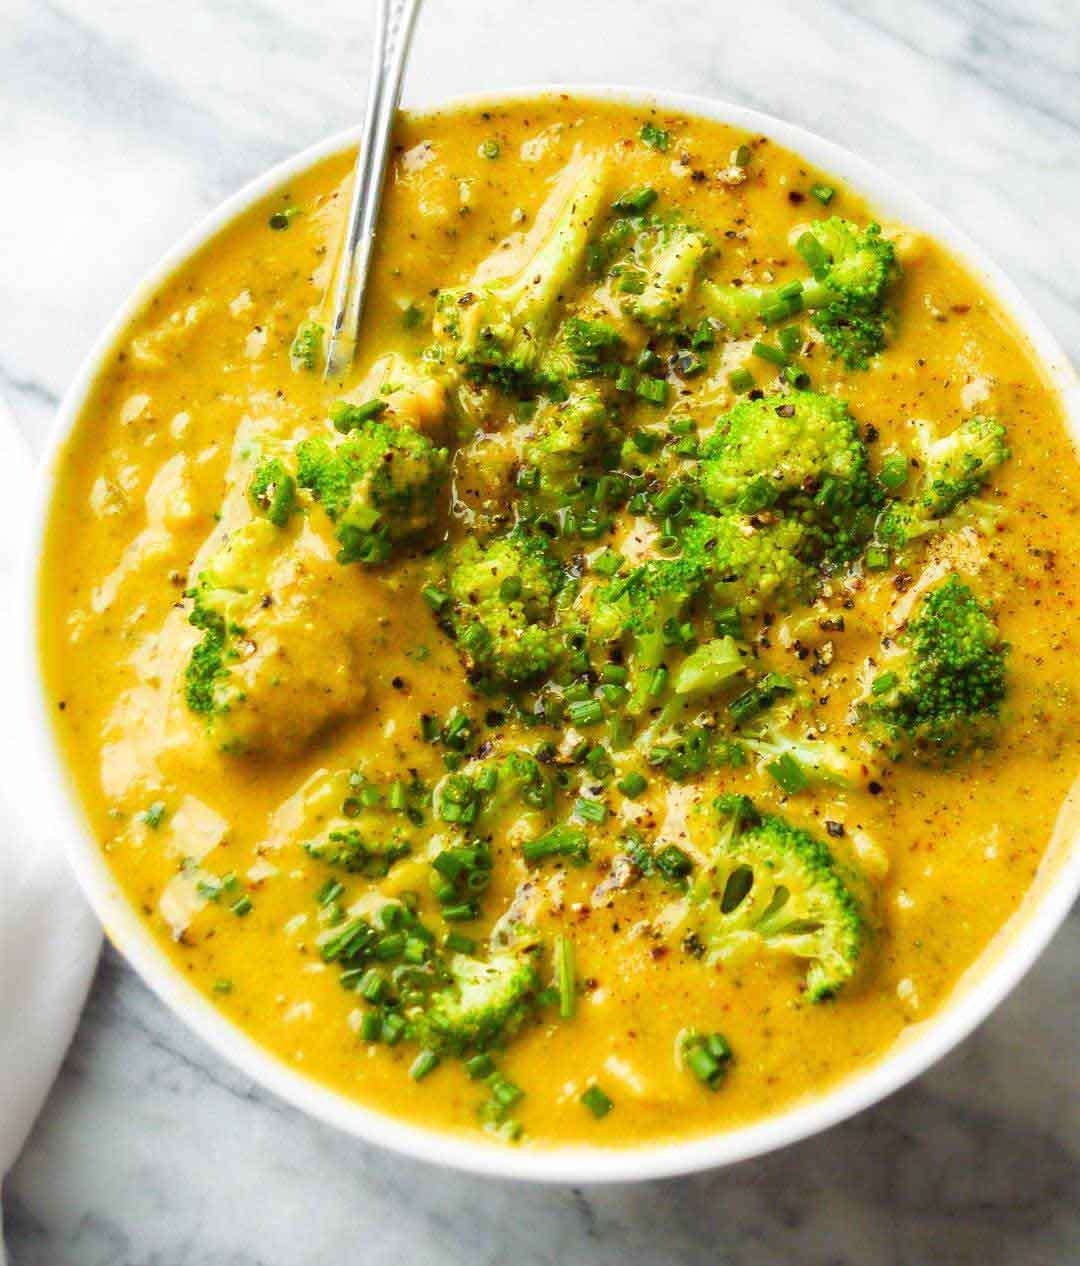 Vegan Broccoli Cheddar Soup recipe served in a bowl.